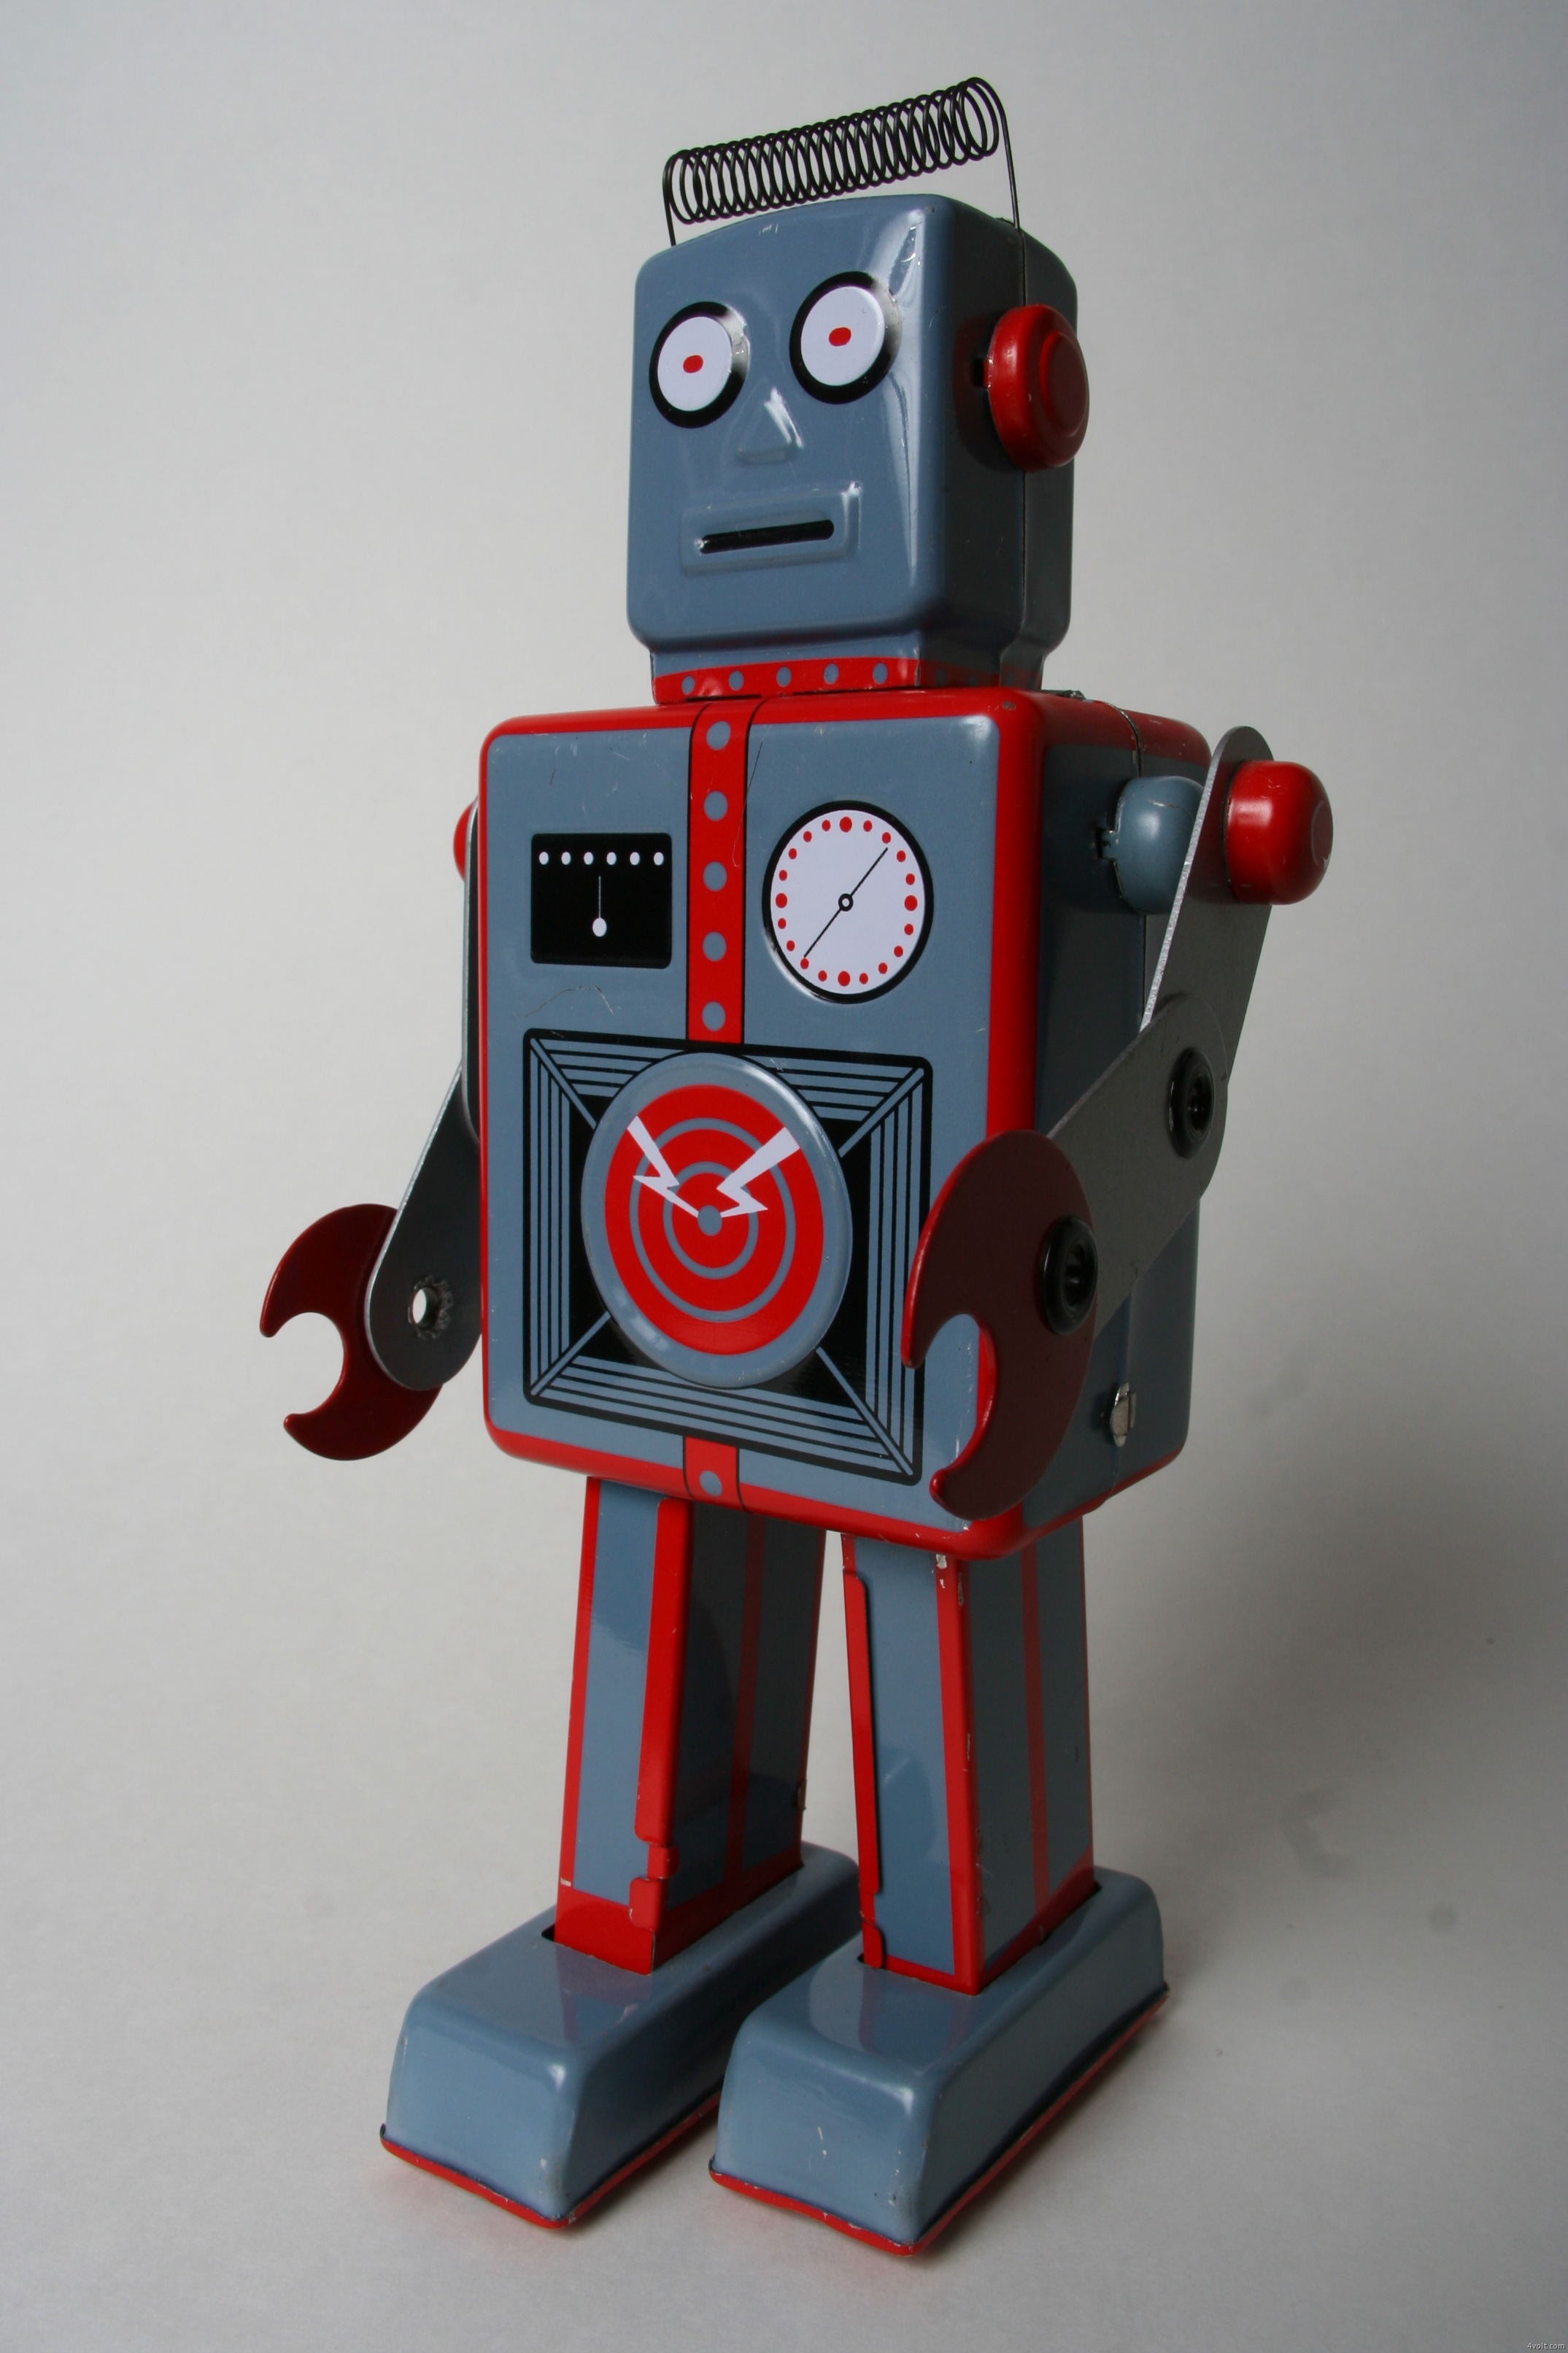 Retro Robot Art Image A Day